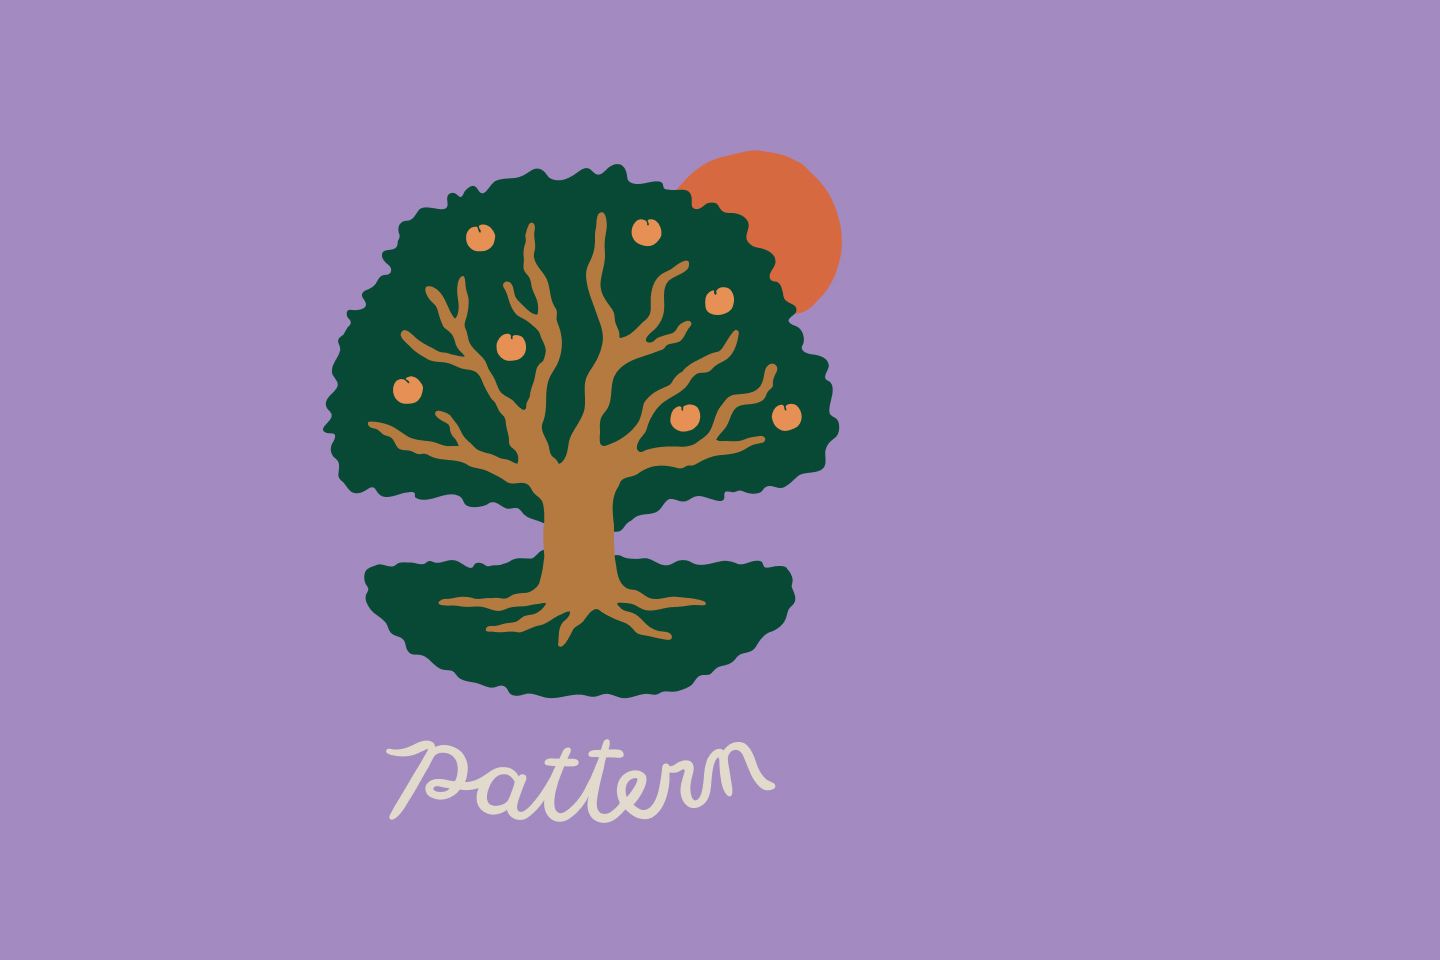 Pattern logo on a purple background.